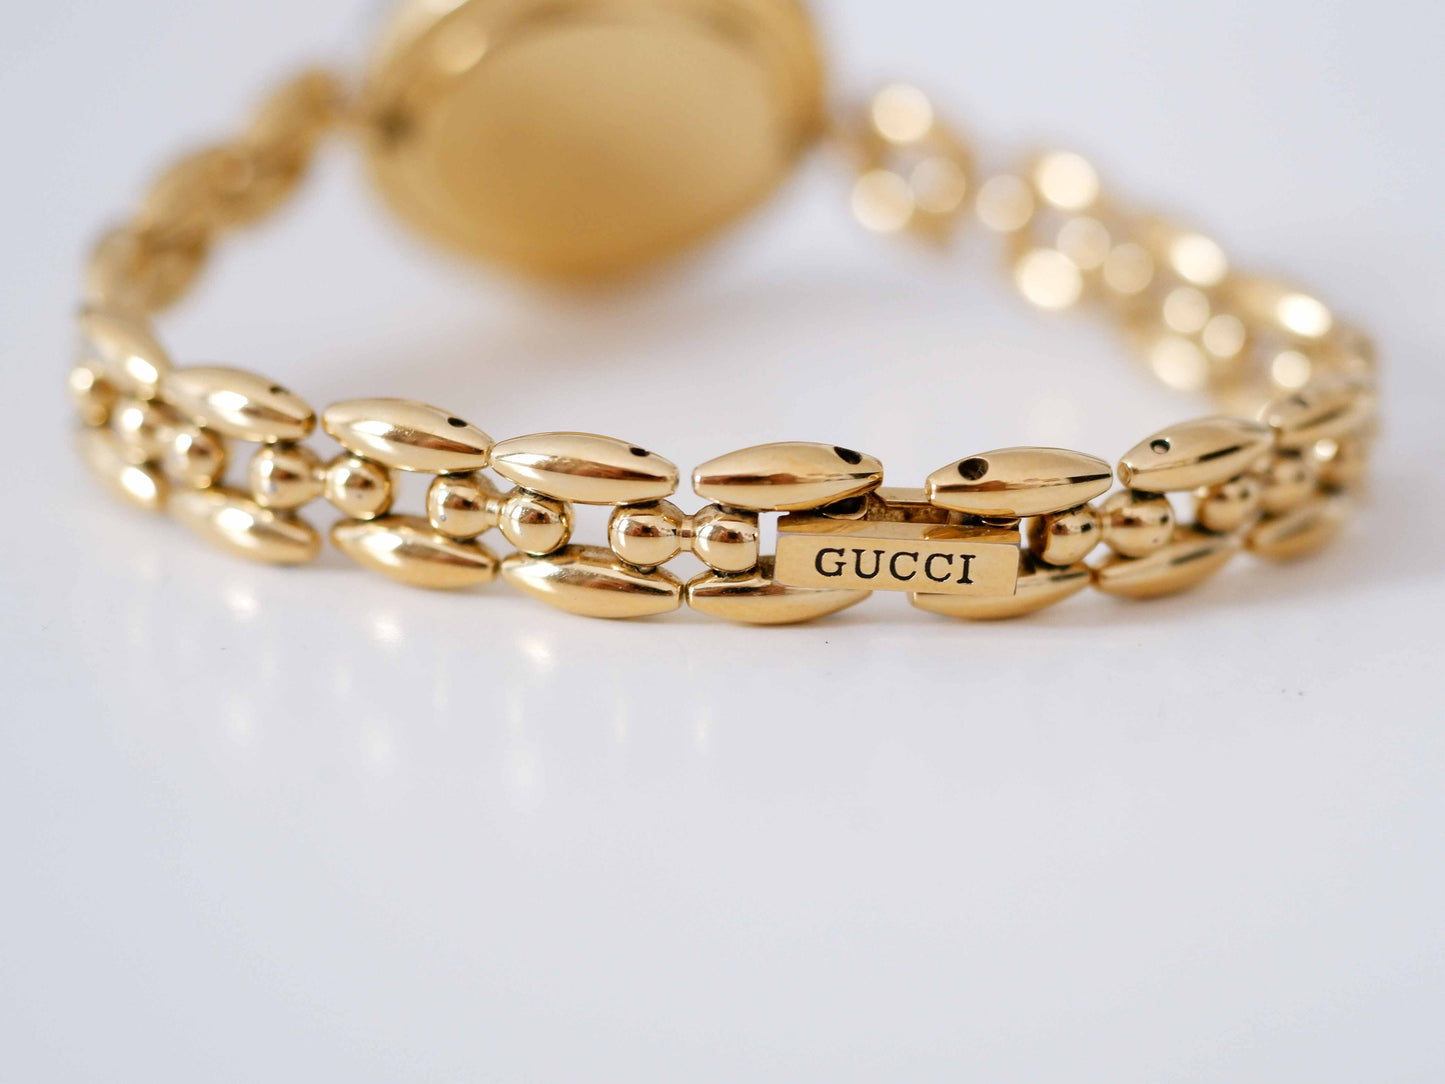 Gucci 11/12.2 Bezel Vintage Ladies Watch: 90s Golden Classic, Clasp